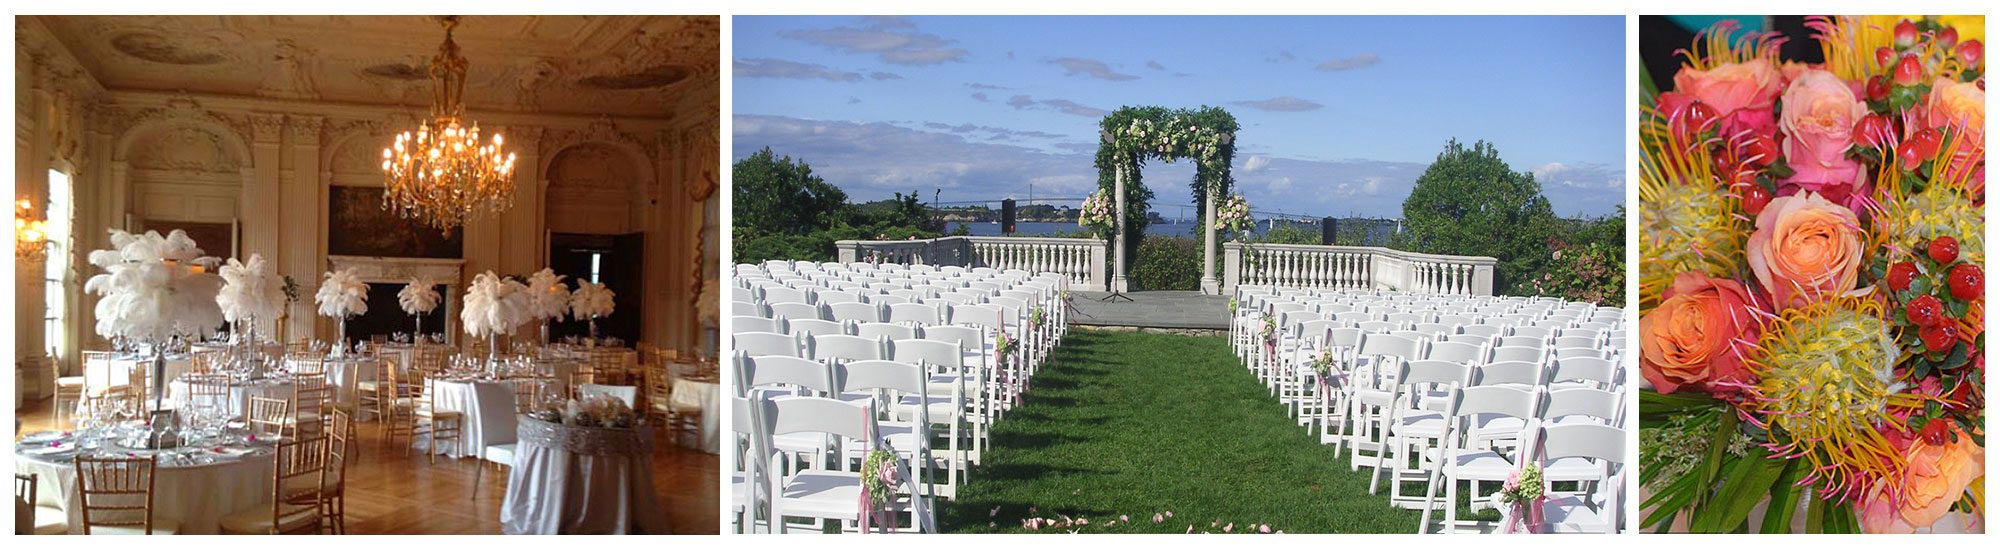 newport ri is one of new england's top wedding destinations